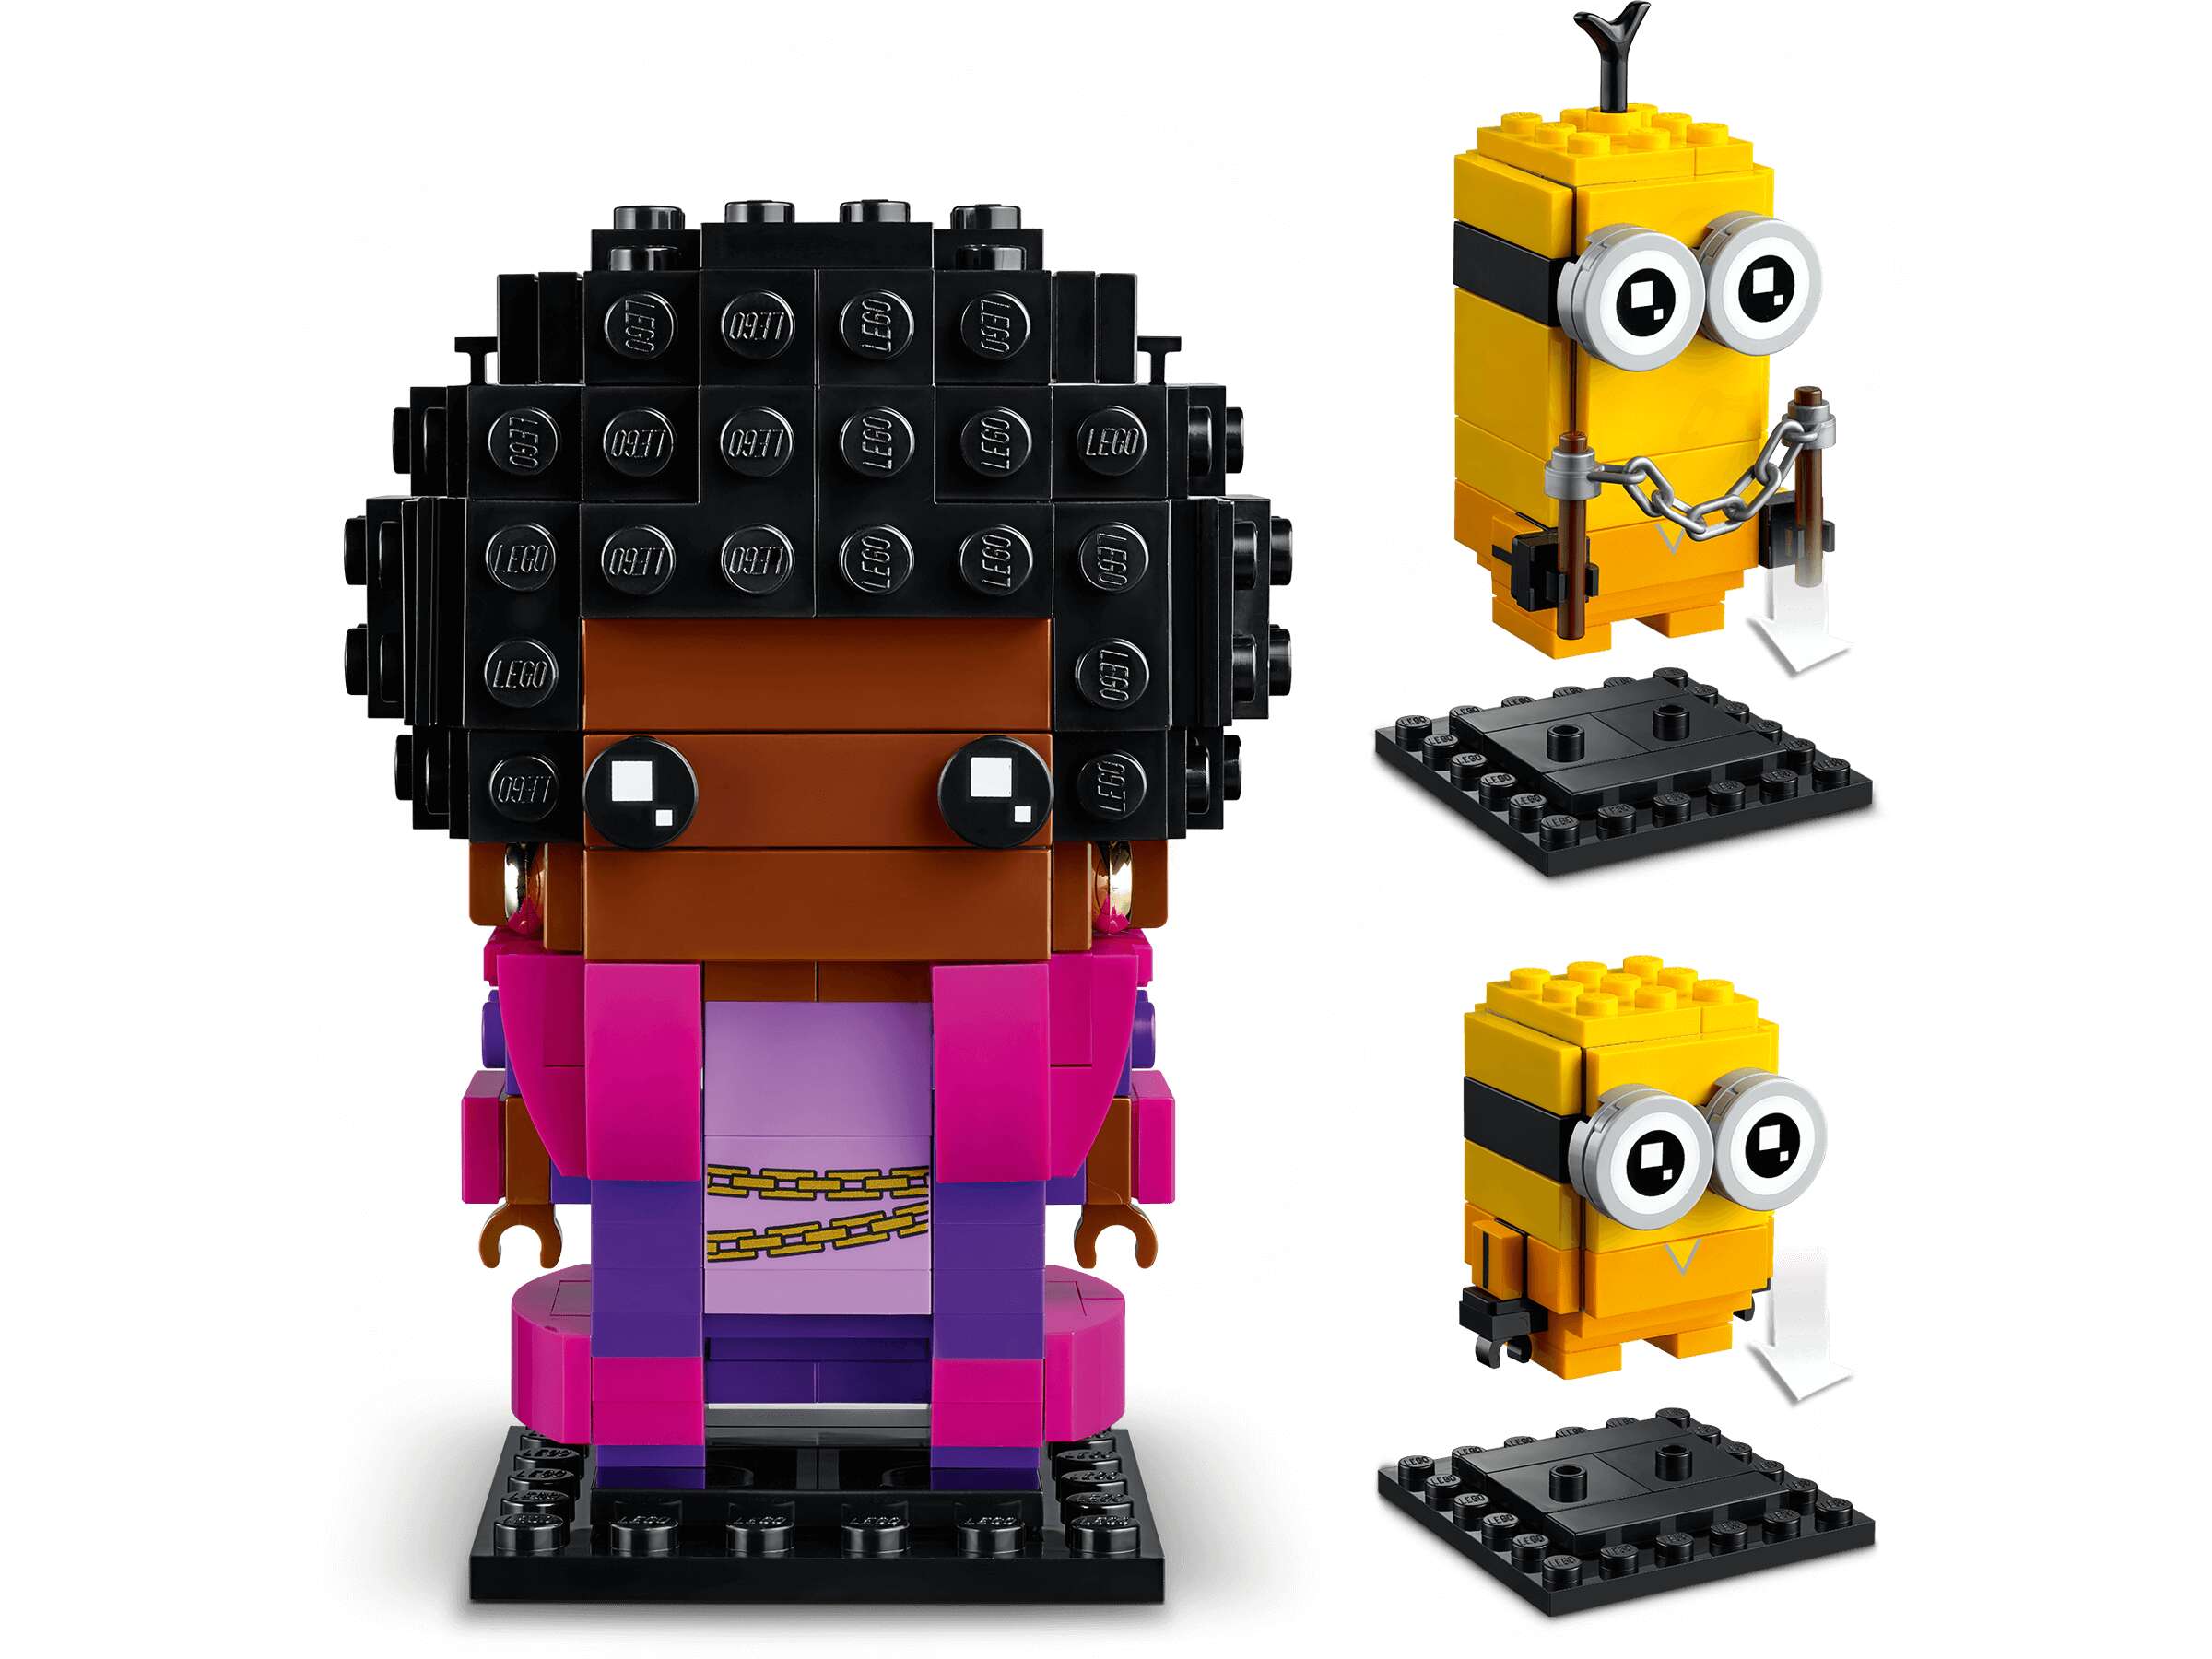 LEGO 40421 Minions Brickheadz Belle Bottom, Kevin und Bob